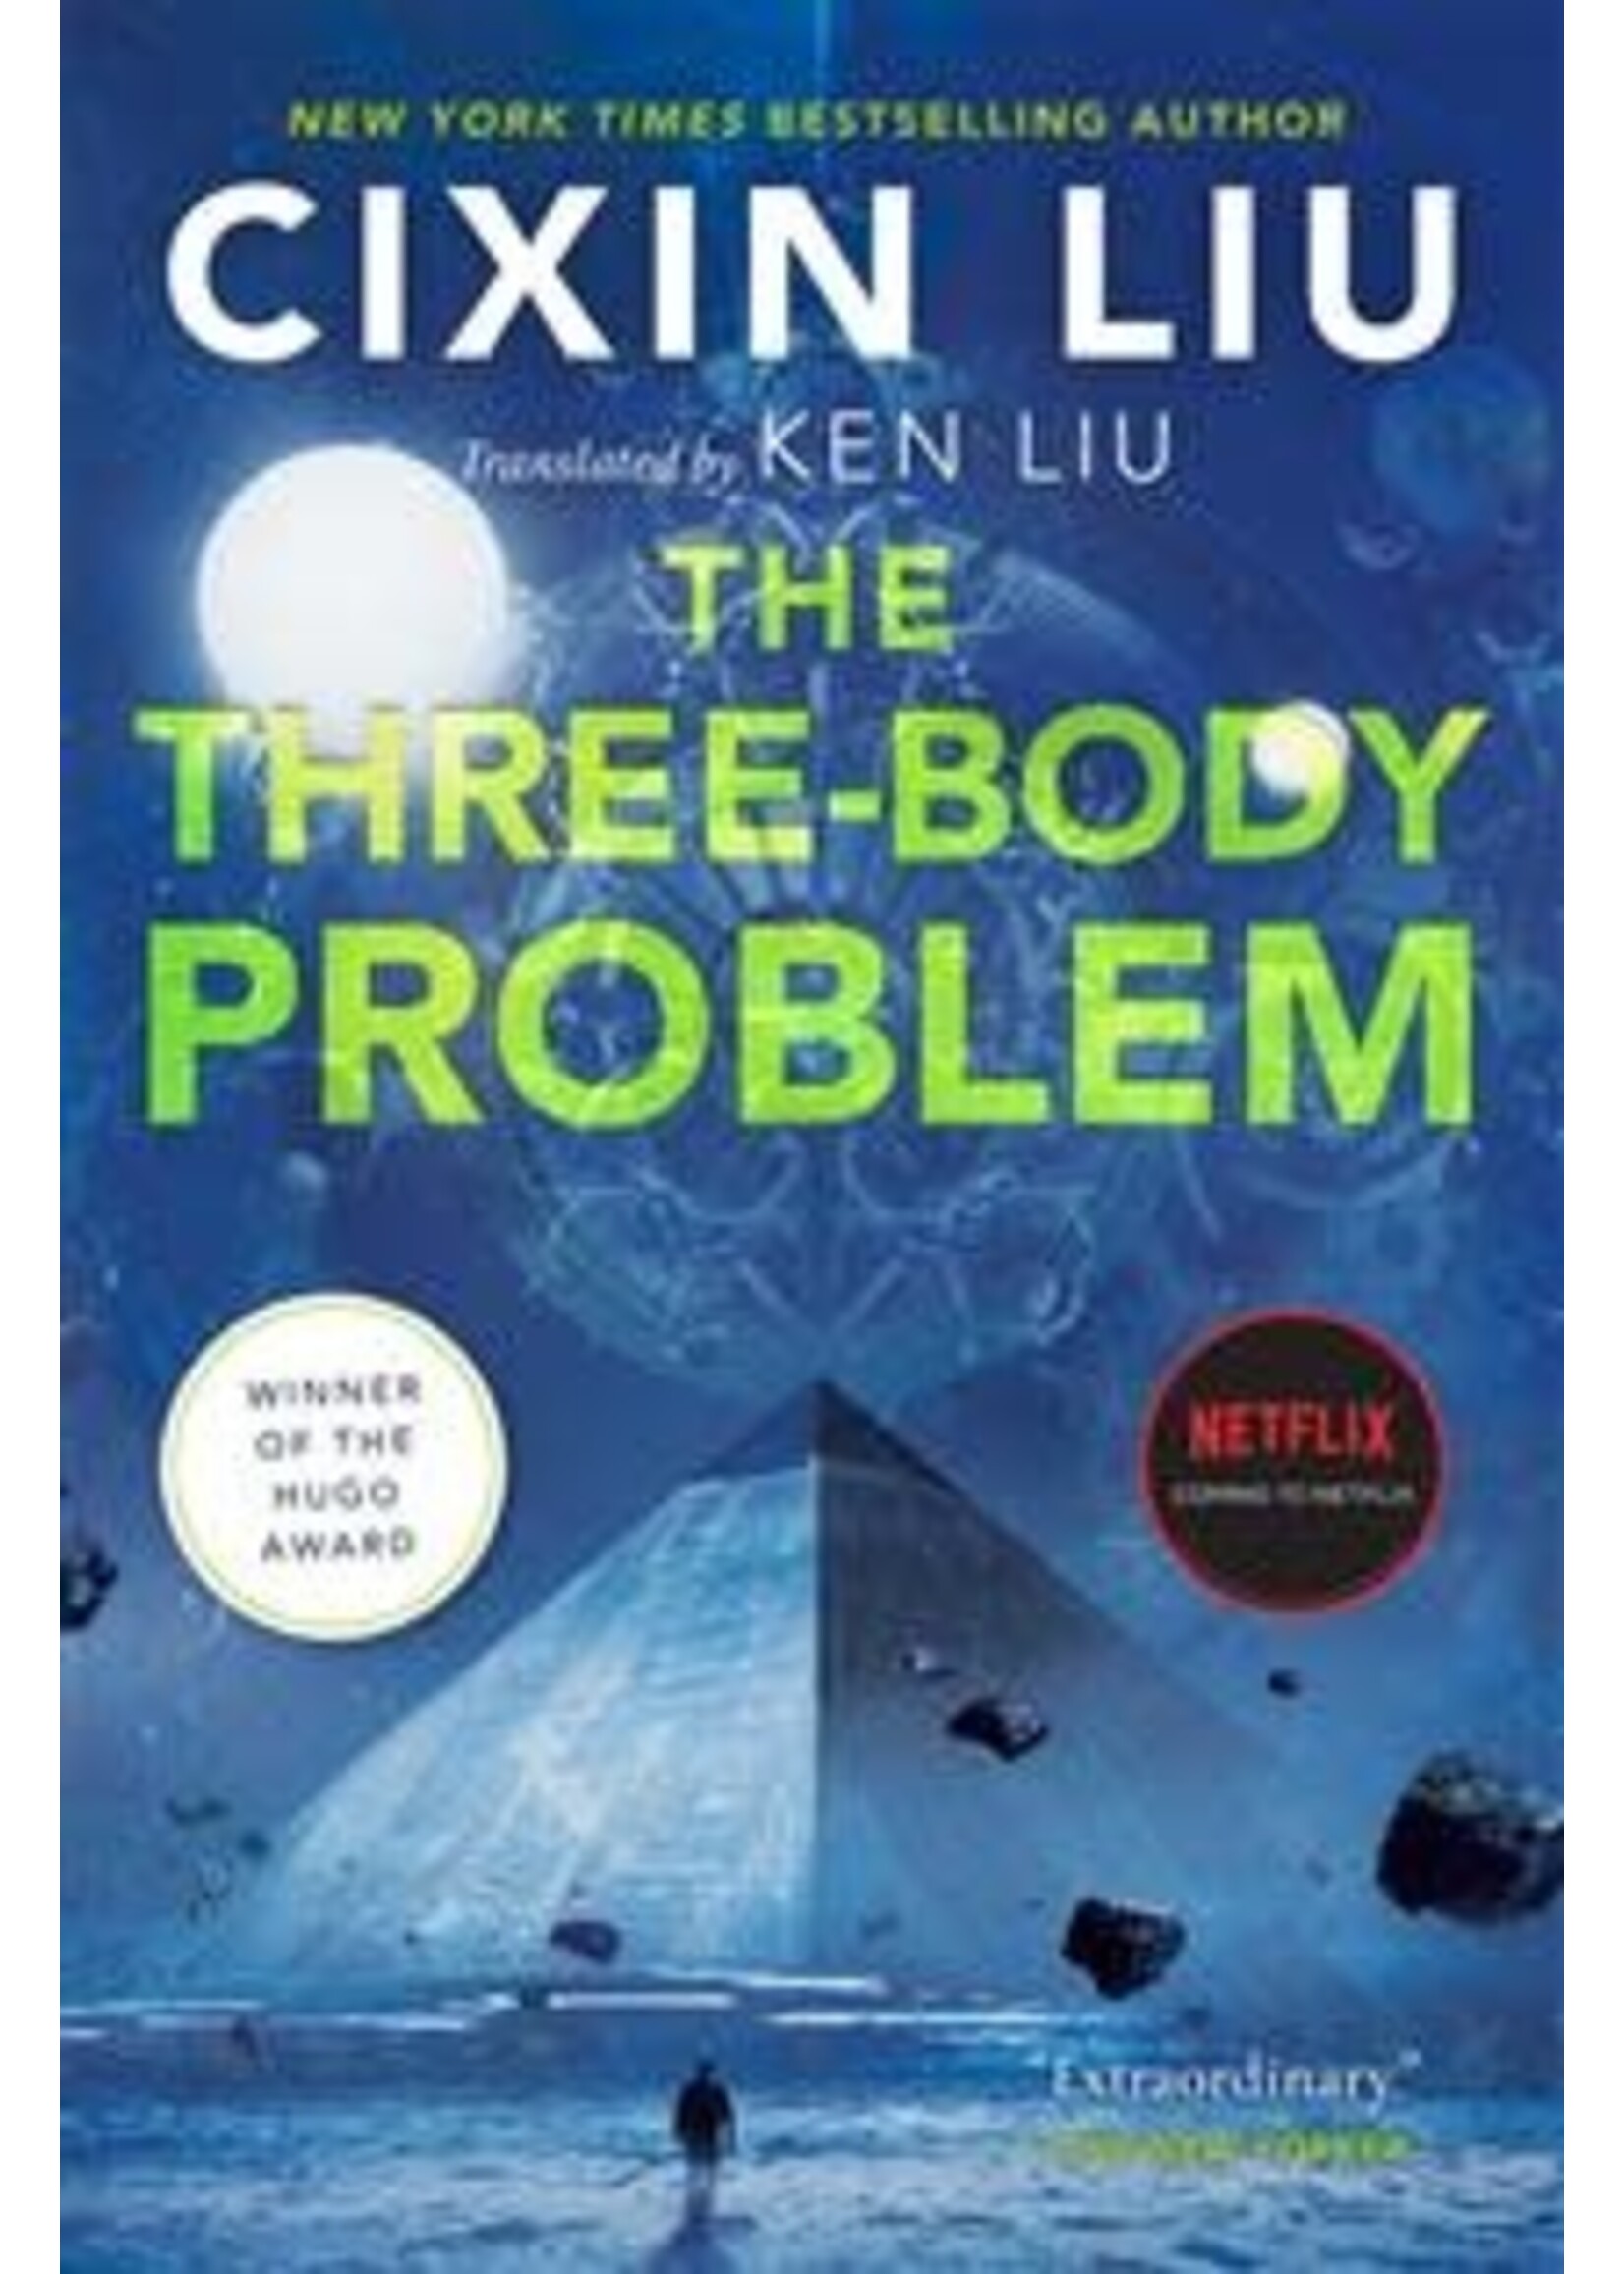 The Three-Body Problem (Three-Body Problem #1) by Cixin Liu